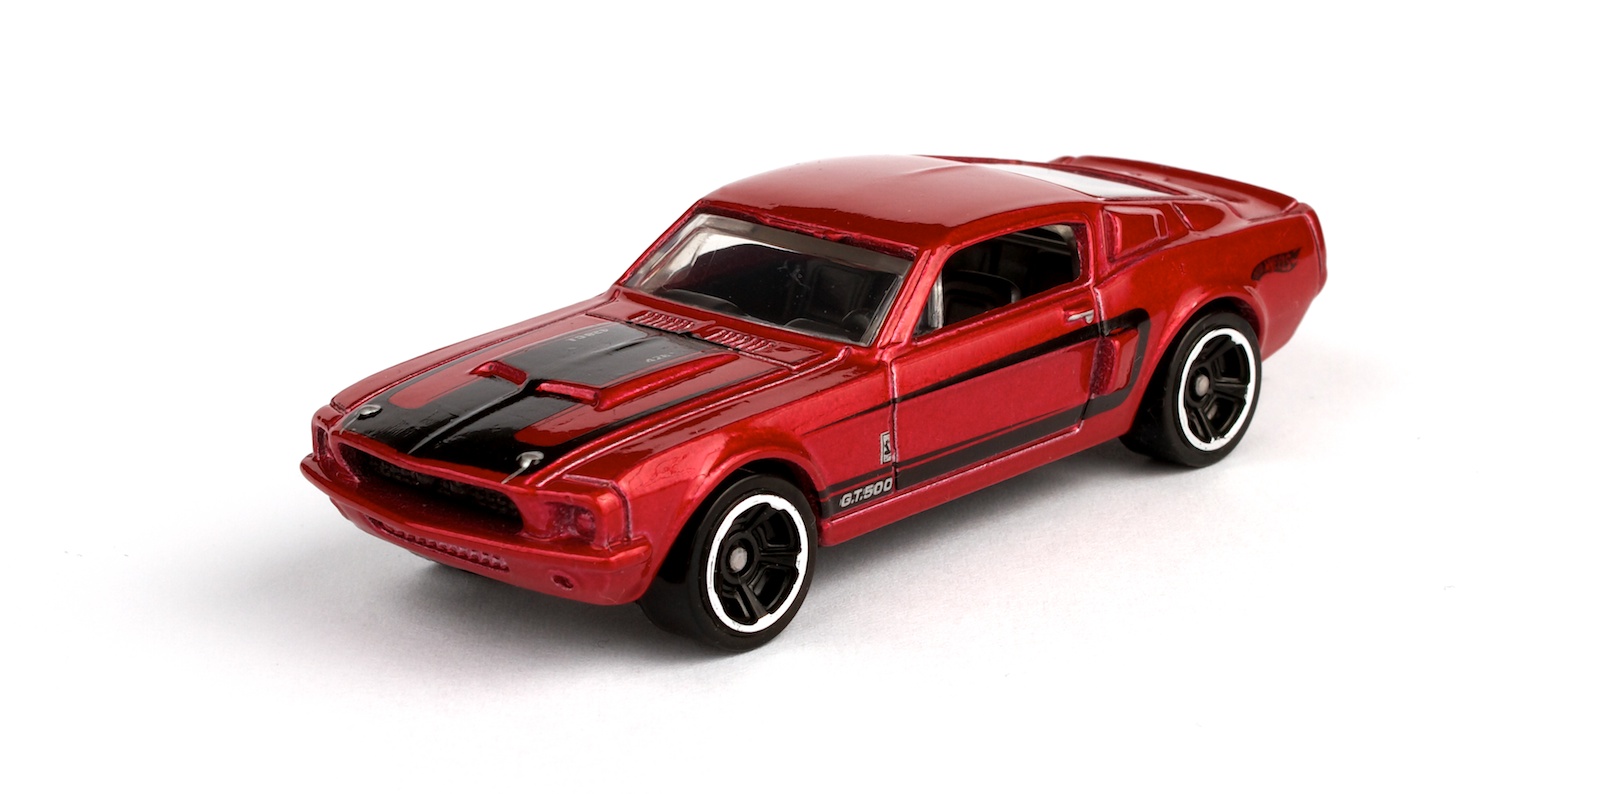 Hot Wheels 1967 Shelby Mustang GT500 | Flickr - Photo Sharing!